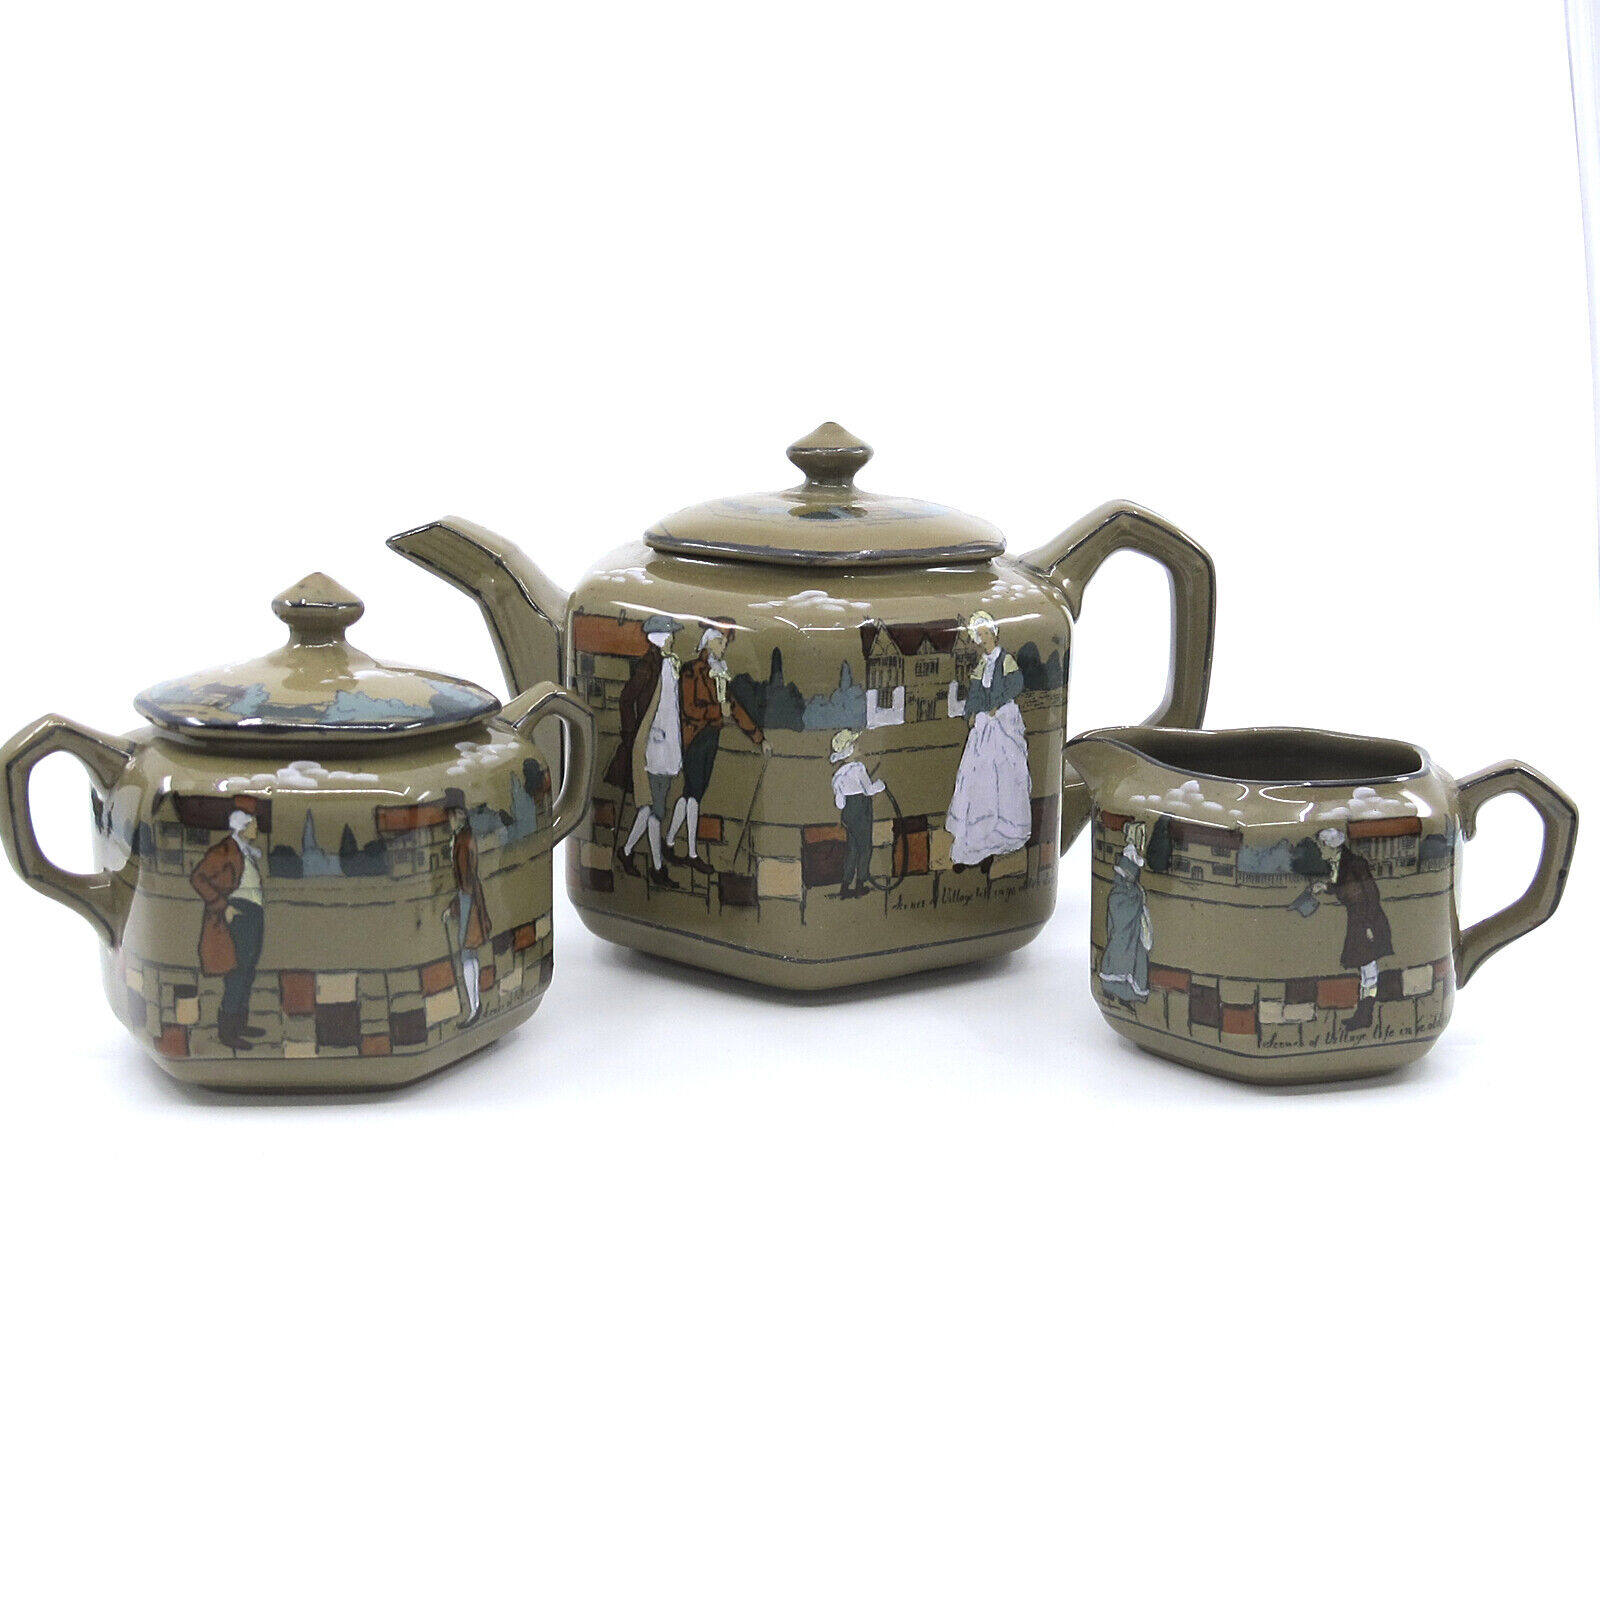 YE OLDEN DAYS Deldare Ware BUFFALO POTTERY Tea Set Creamer Sugar Teapot